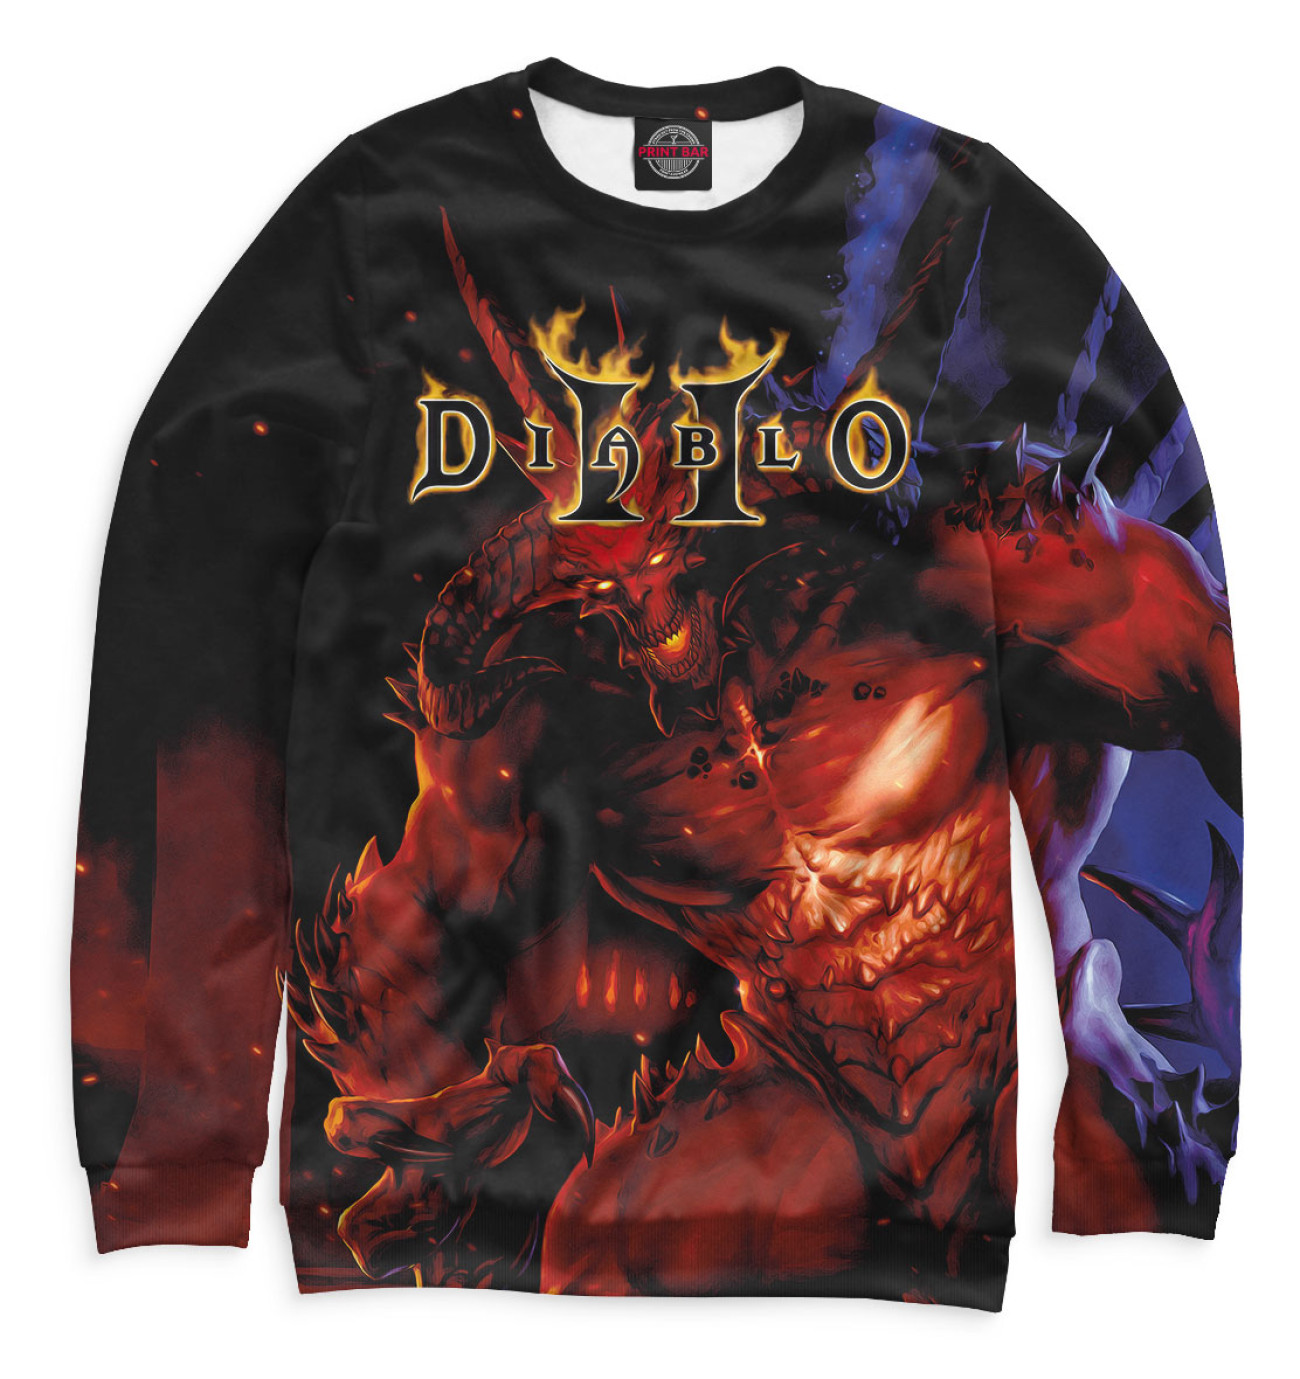 Мужской Свитшот Diablo II, артикул: DBO-403179-swi-2